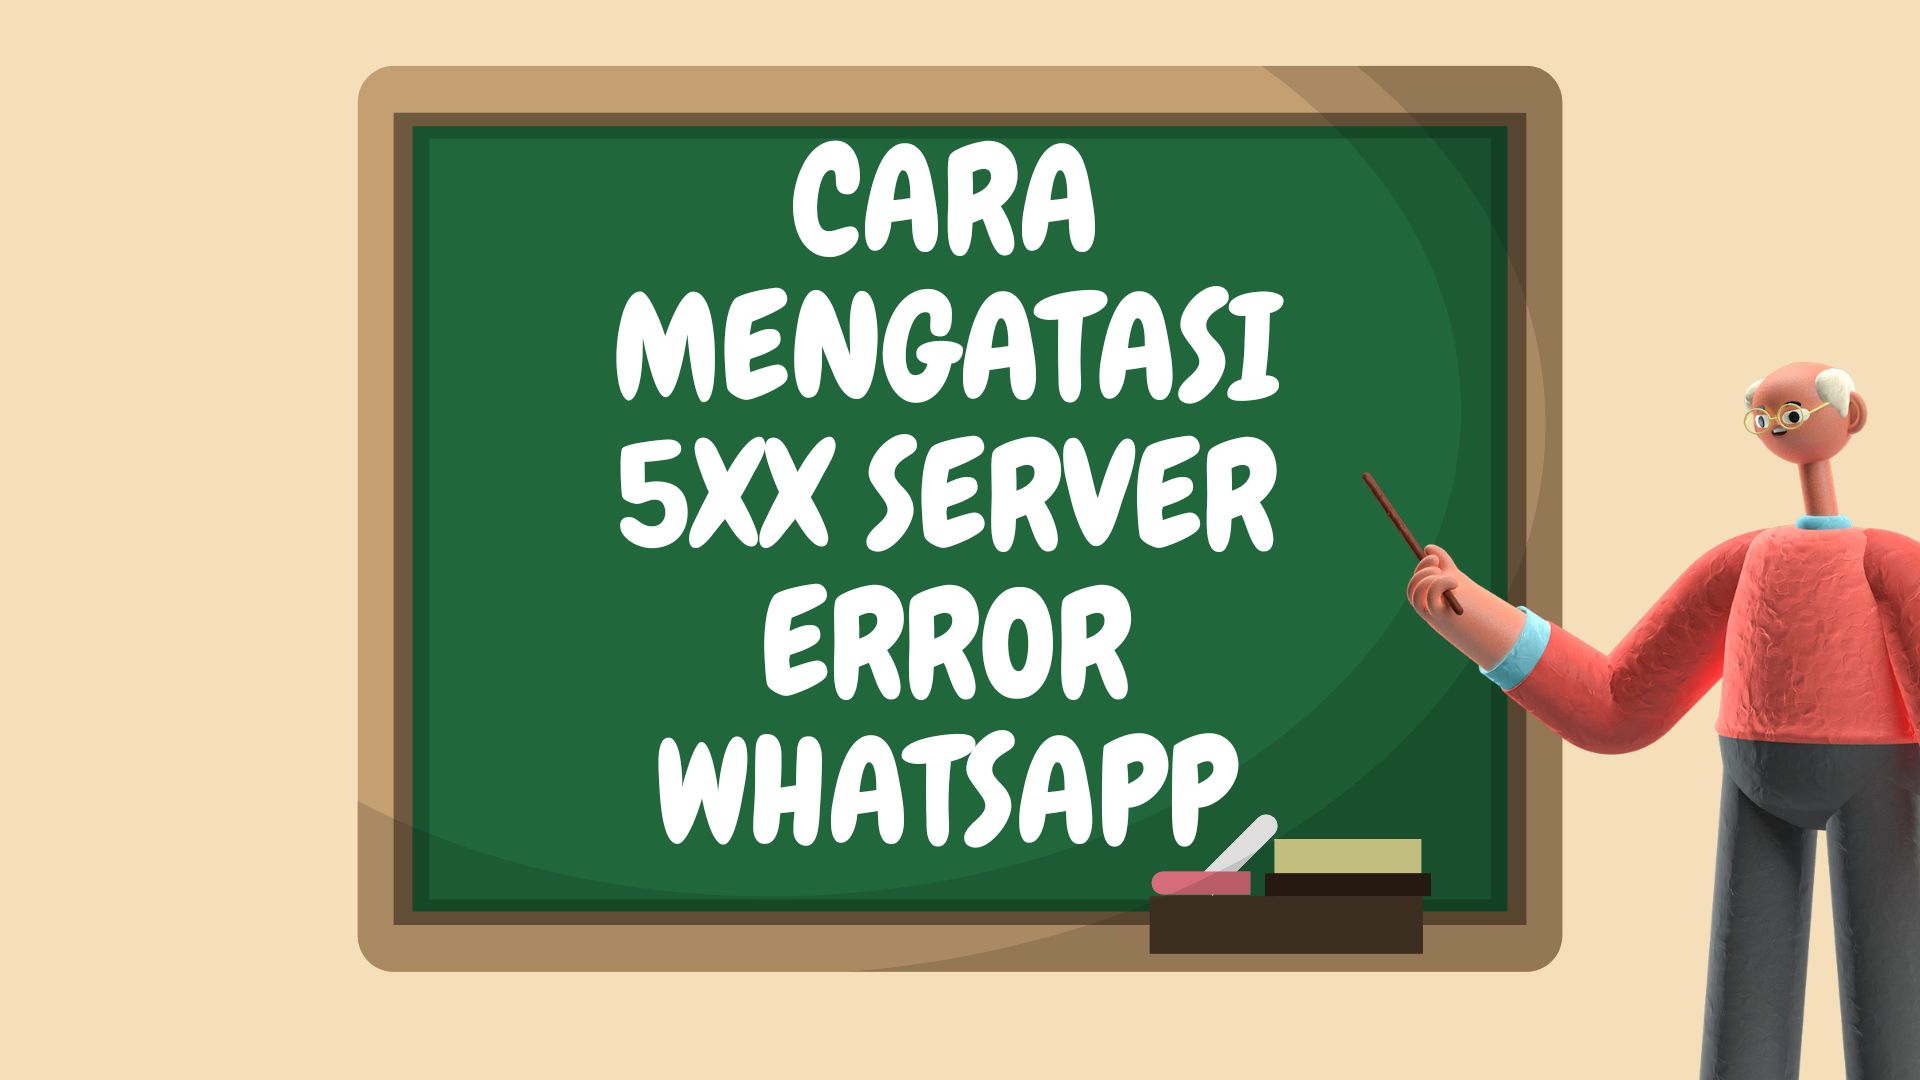 5xx server error whatsapp